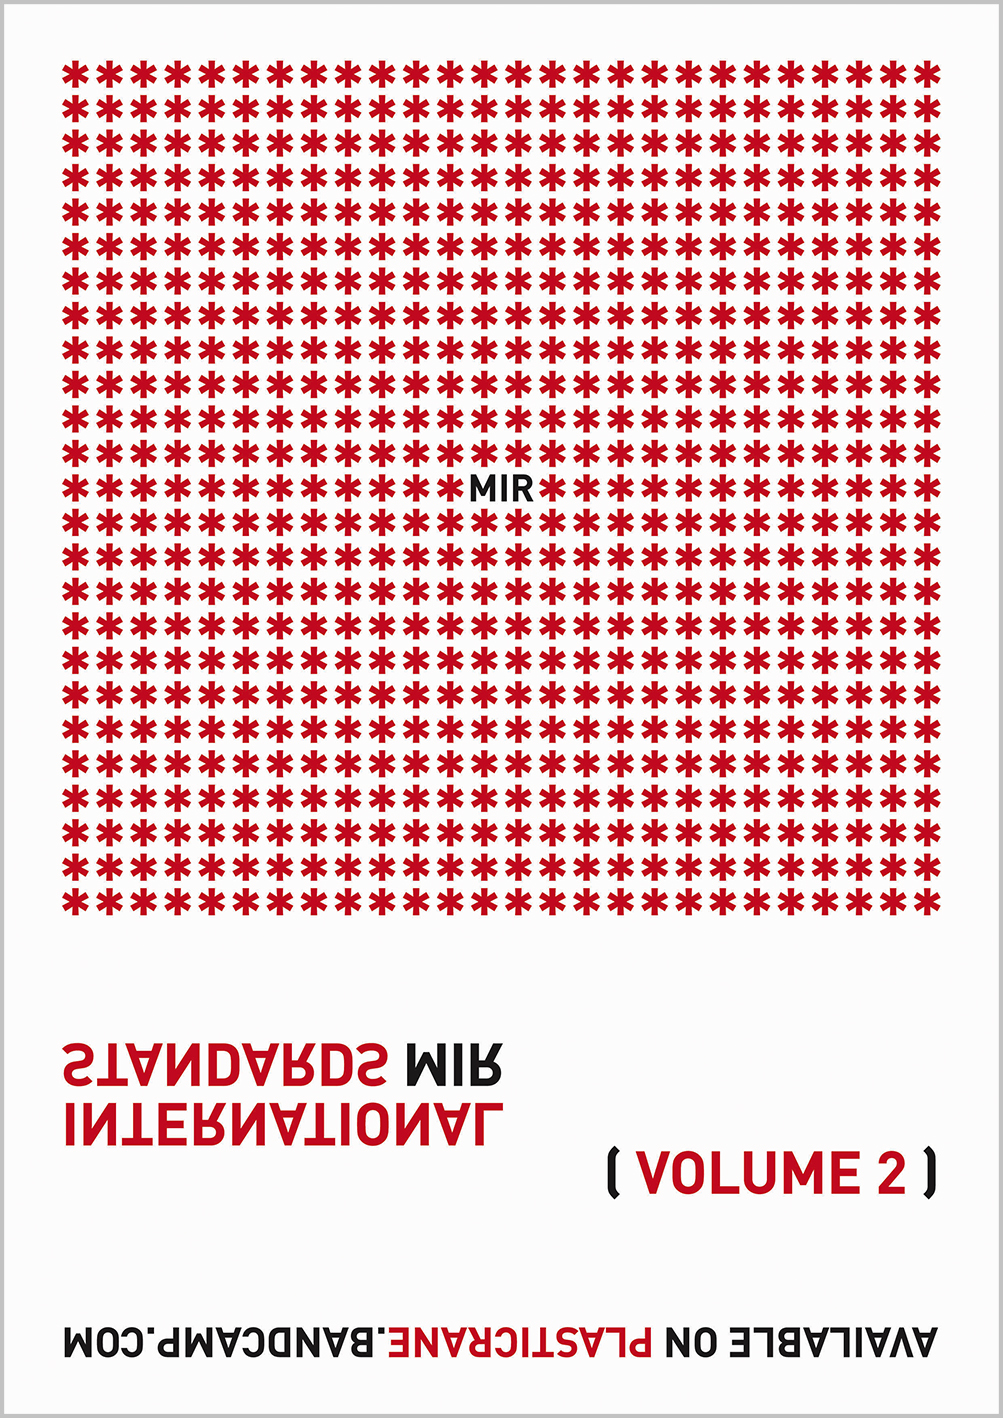 MIR. International Standards Vol. 2. Poster. 2021